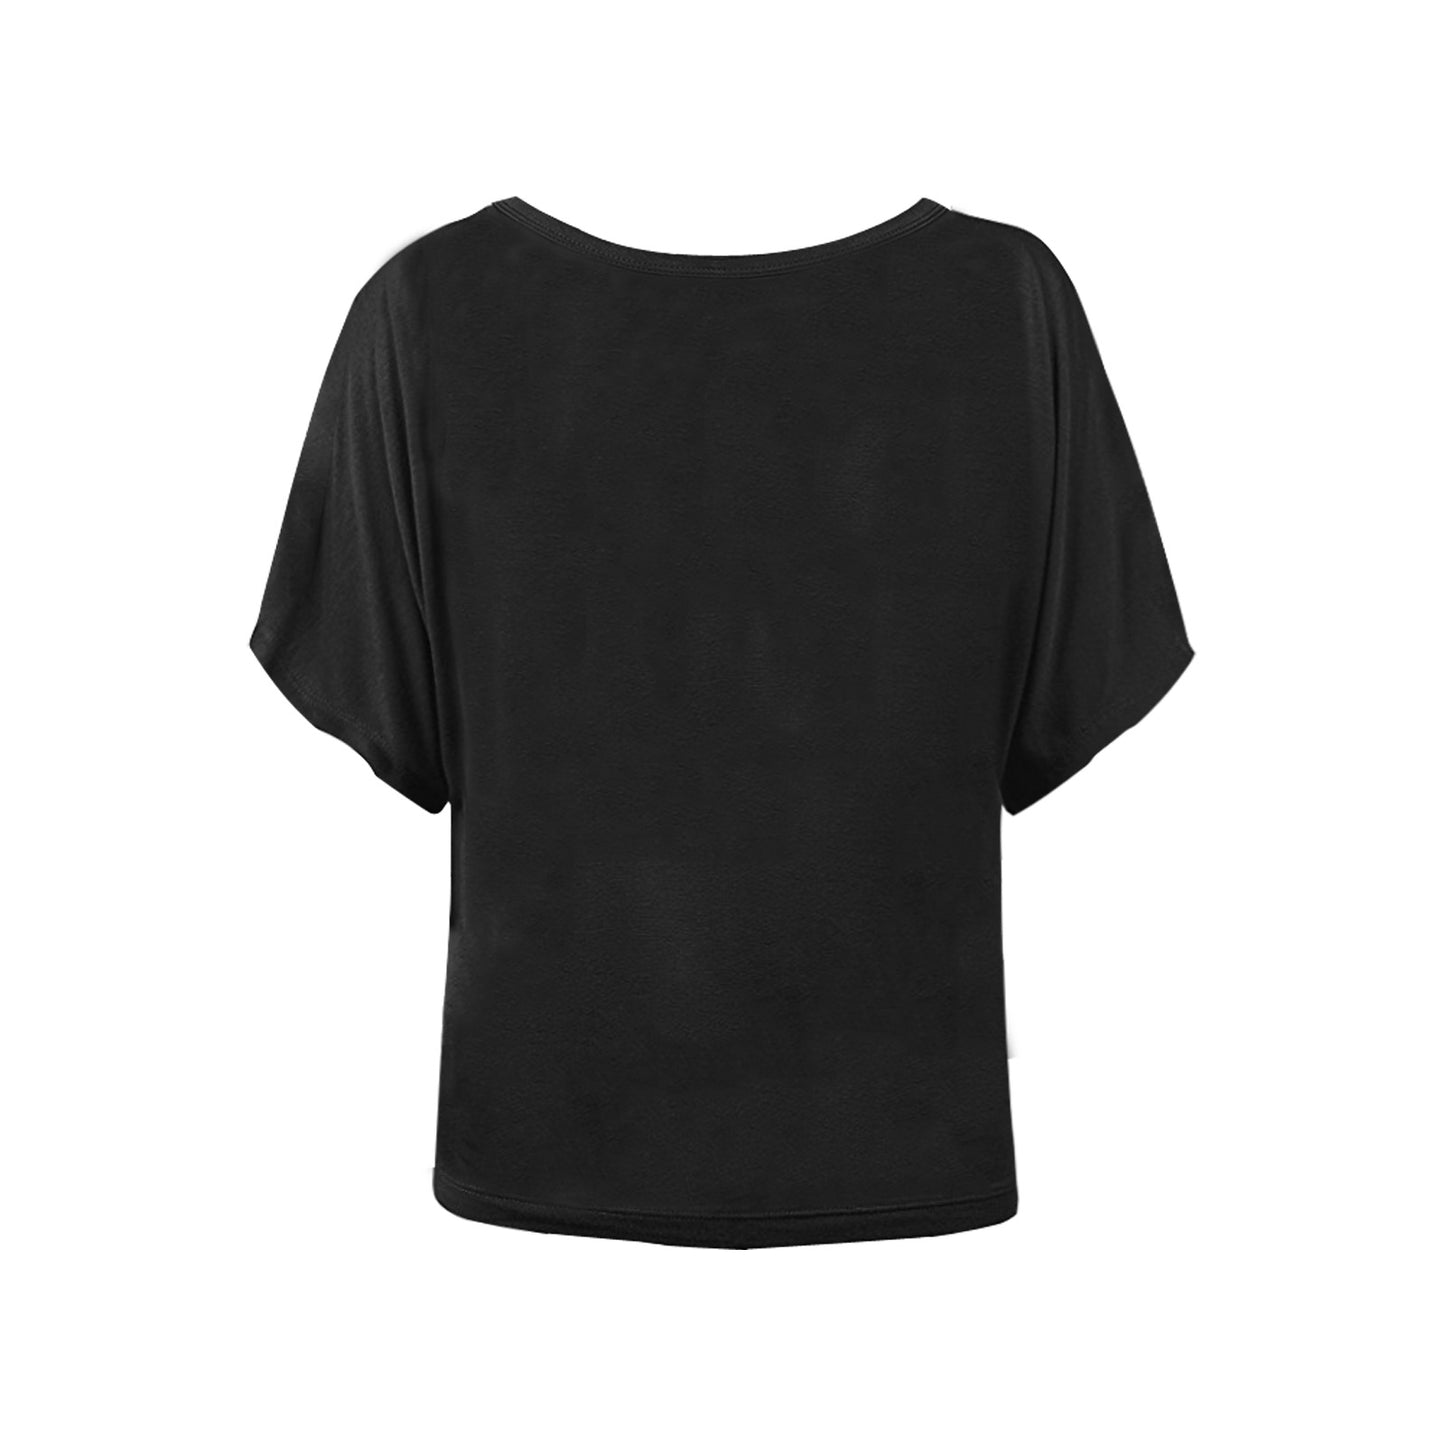 Classic Raptor Women's Batwing-Sleeved Blouse T shirt